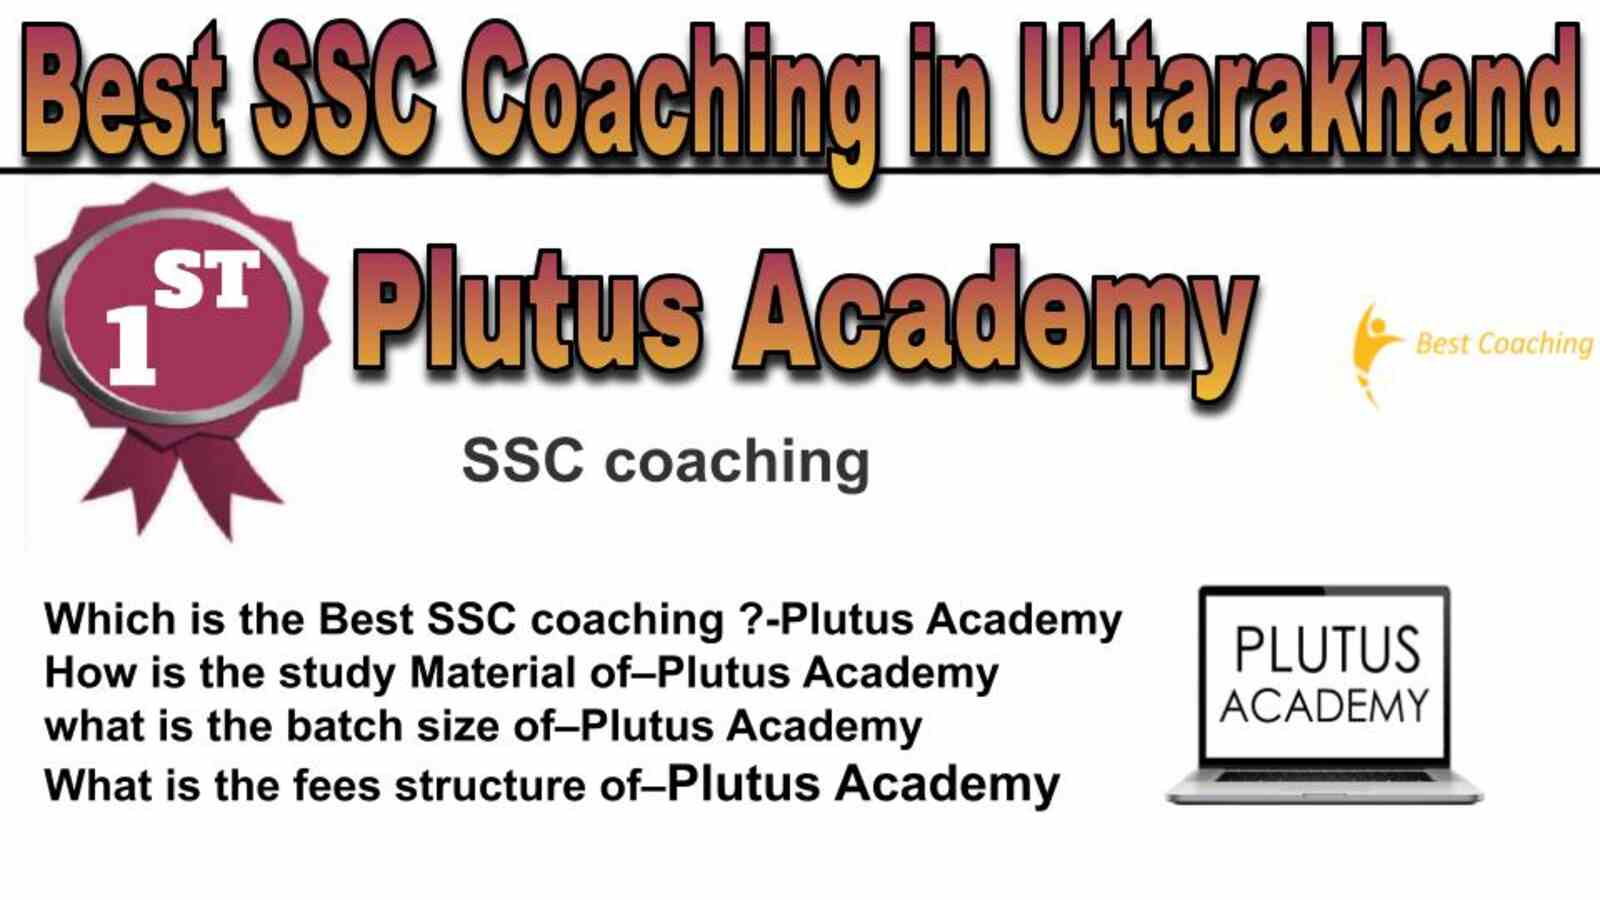 Rank 1 best SSC coaching in Uttarakhand